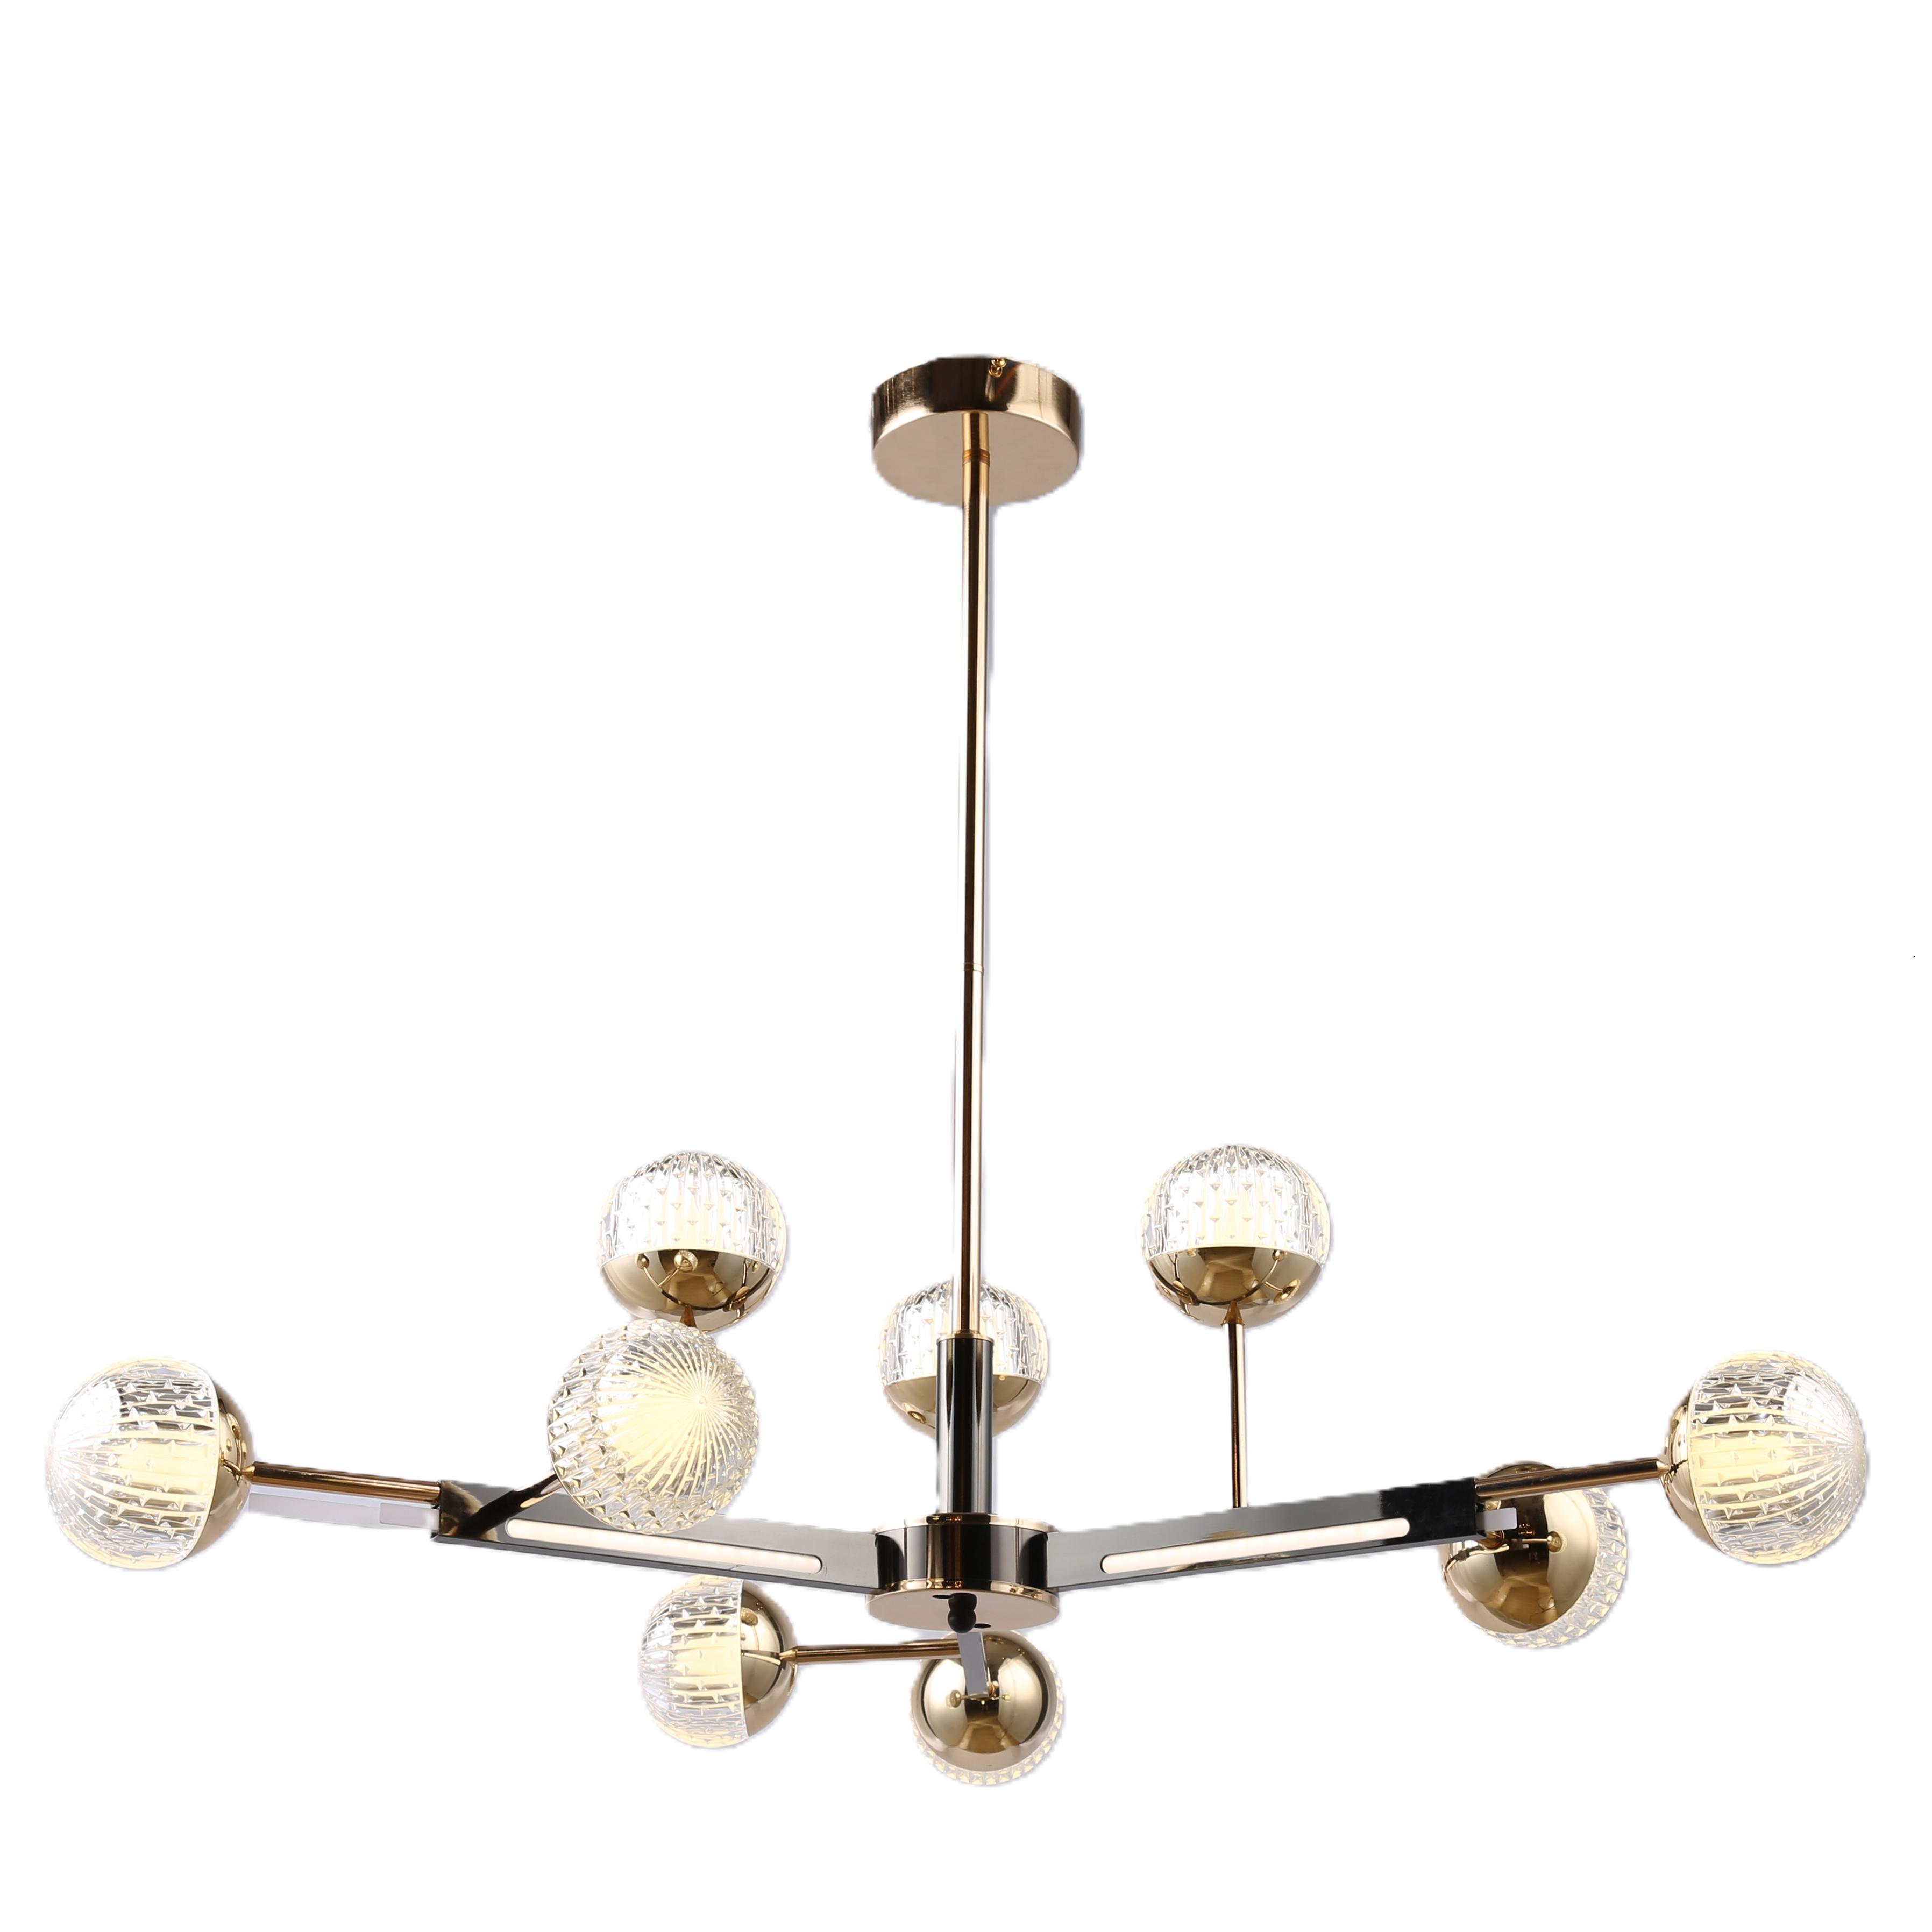 Nordic atmospheric minimalist chandelier